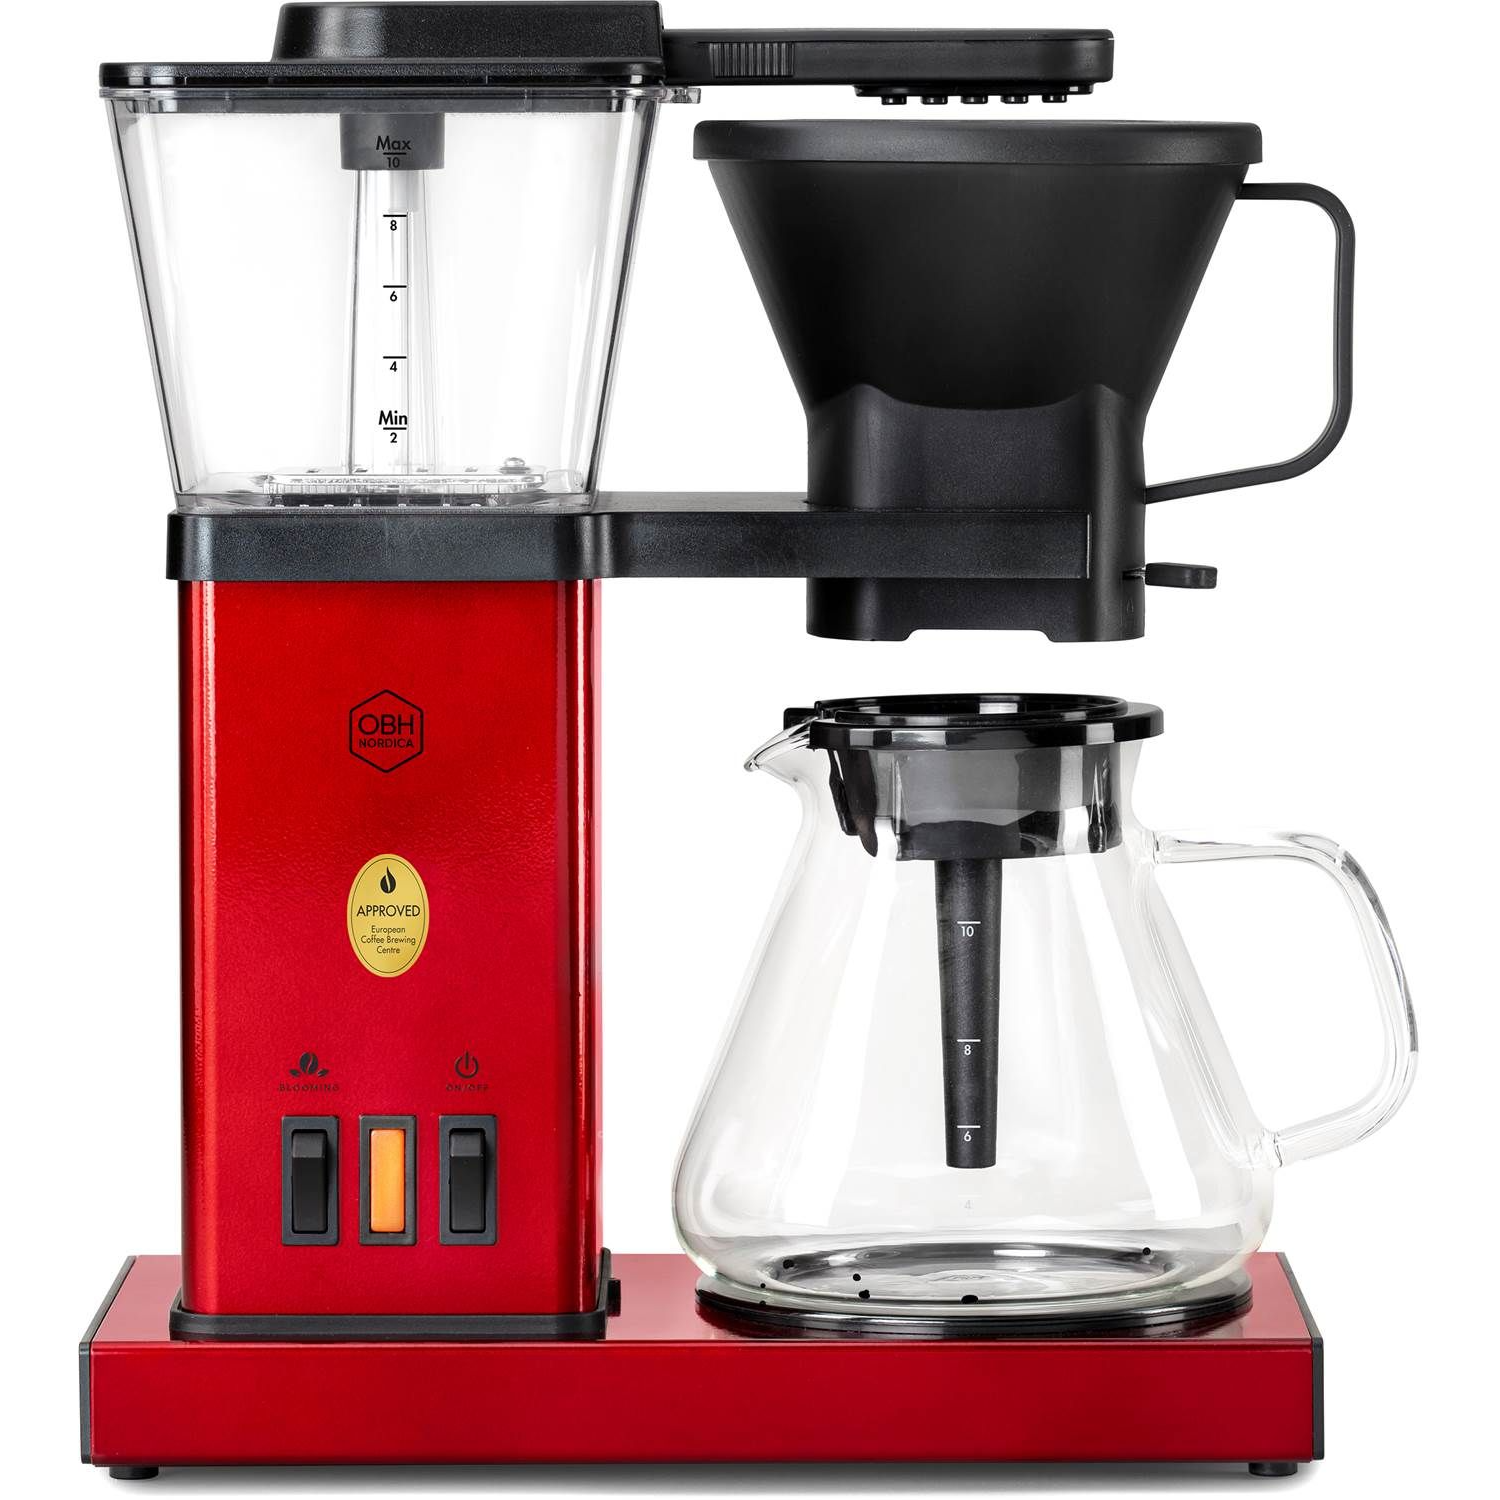 5708642024242 OBH Blooming Prime, chili rød - Kaffemaskine Husholdning,Kaffe,Kaffemaskiner 2190004190 Blooming Prime Chili Red